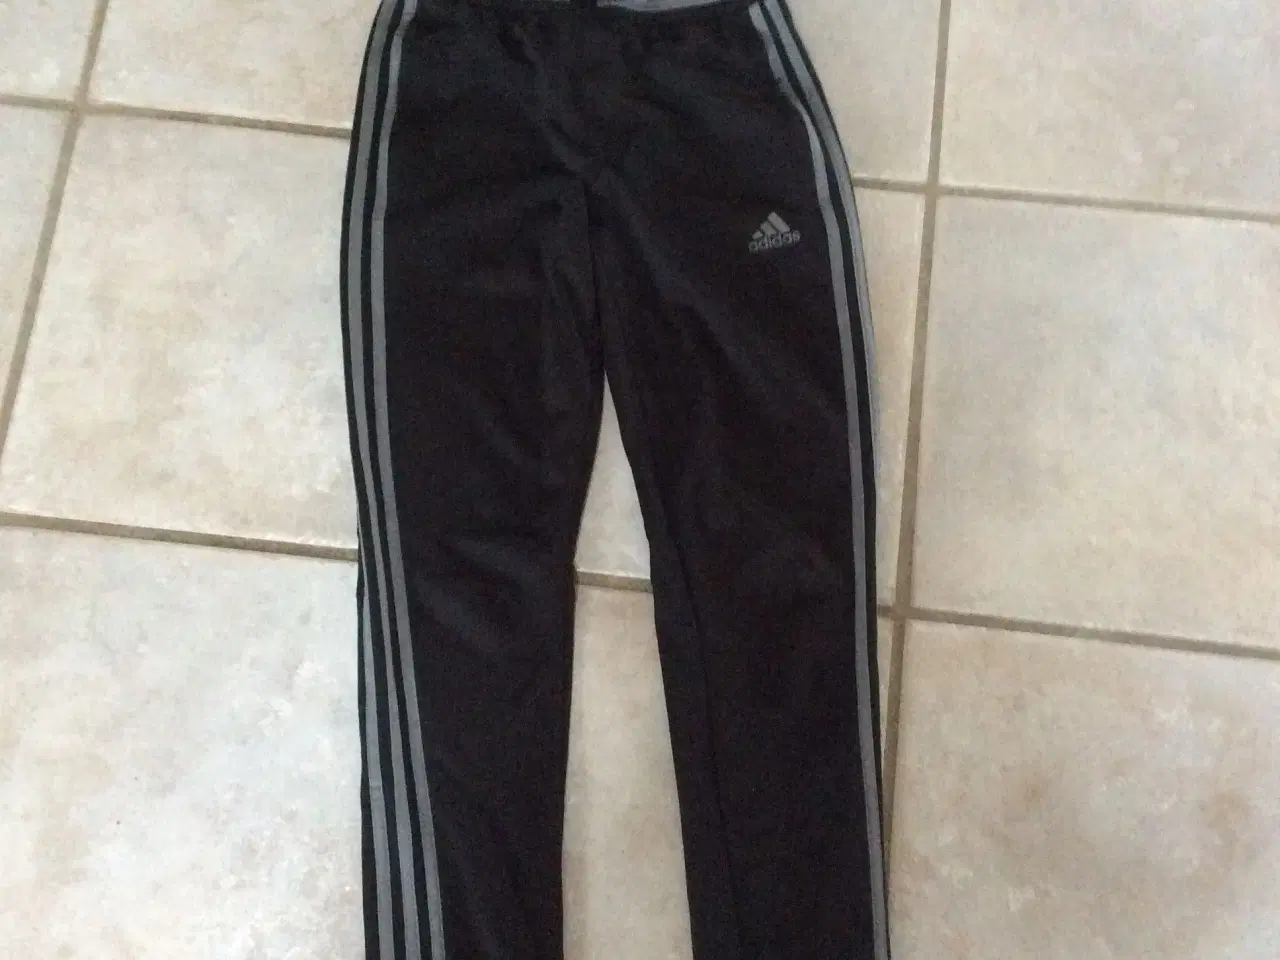 Billede 1 - Adidas bukser sort m grå stribe 